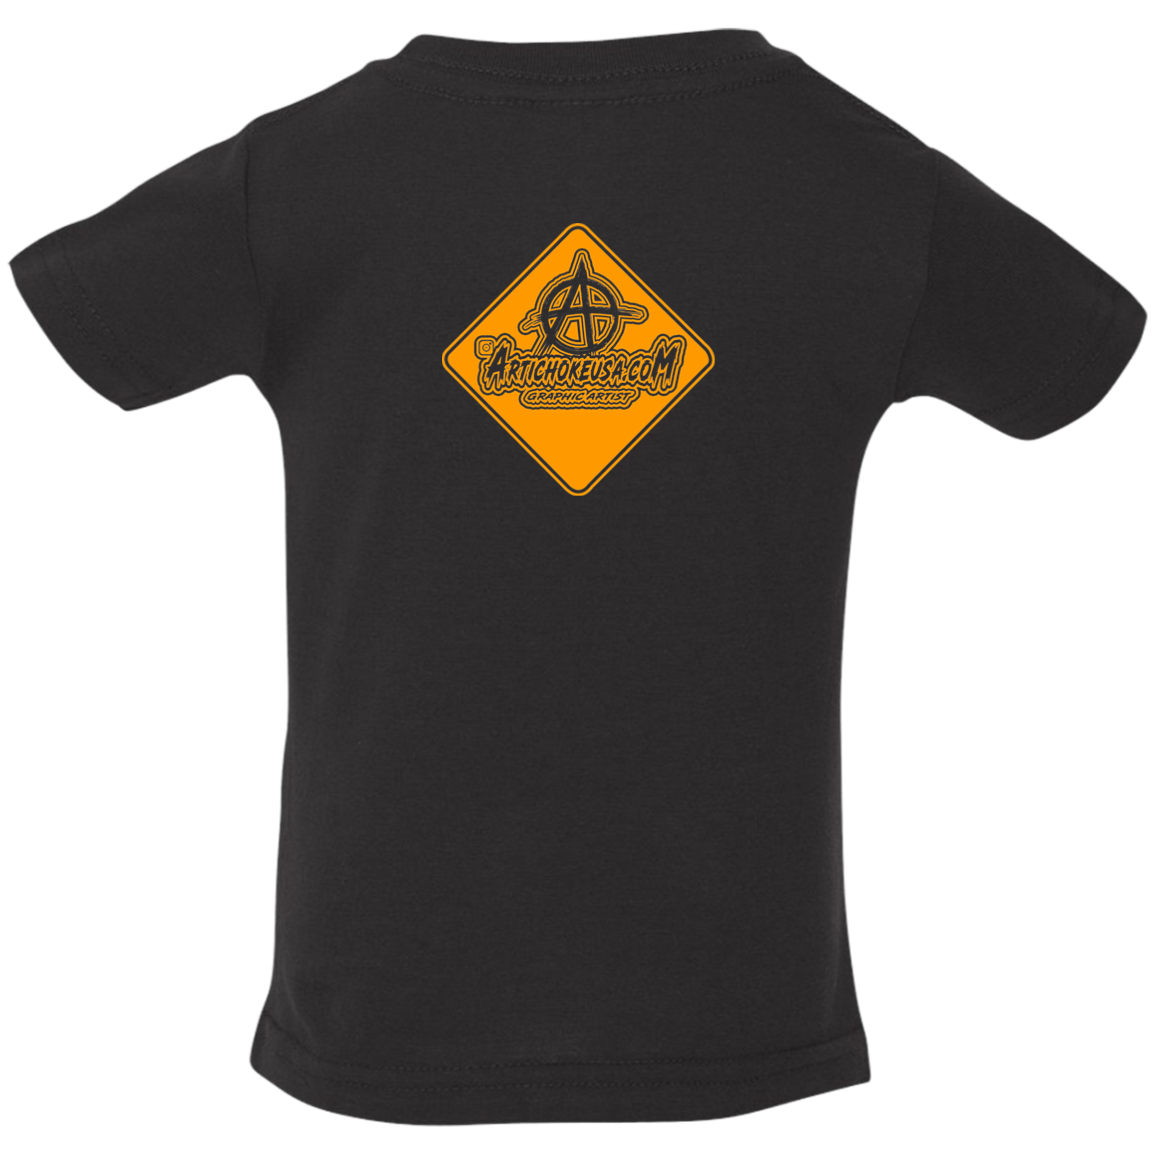 ArtichokeUSA Custom Design. Art Work Ahead. 24,901 Miles (Miles Around the Earth). Infant Jersey T-Shirt